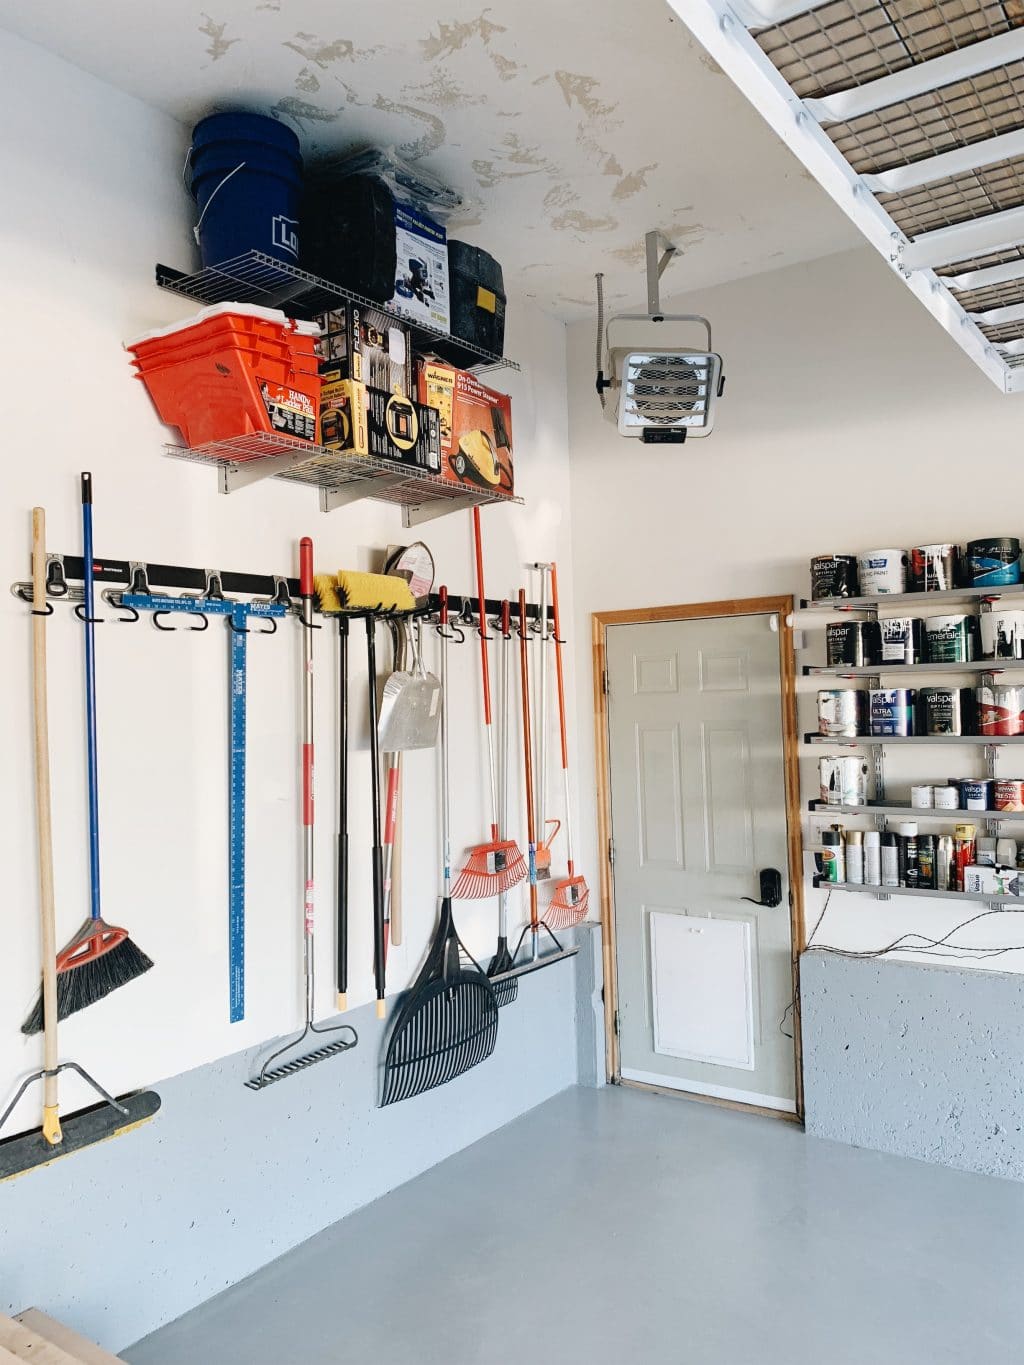 Garage storage and organization options